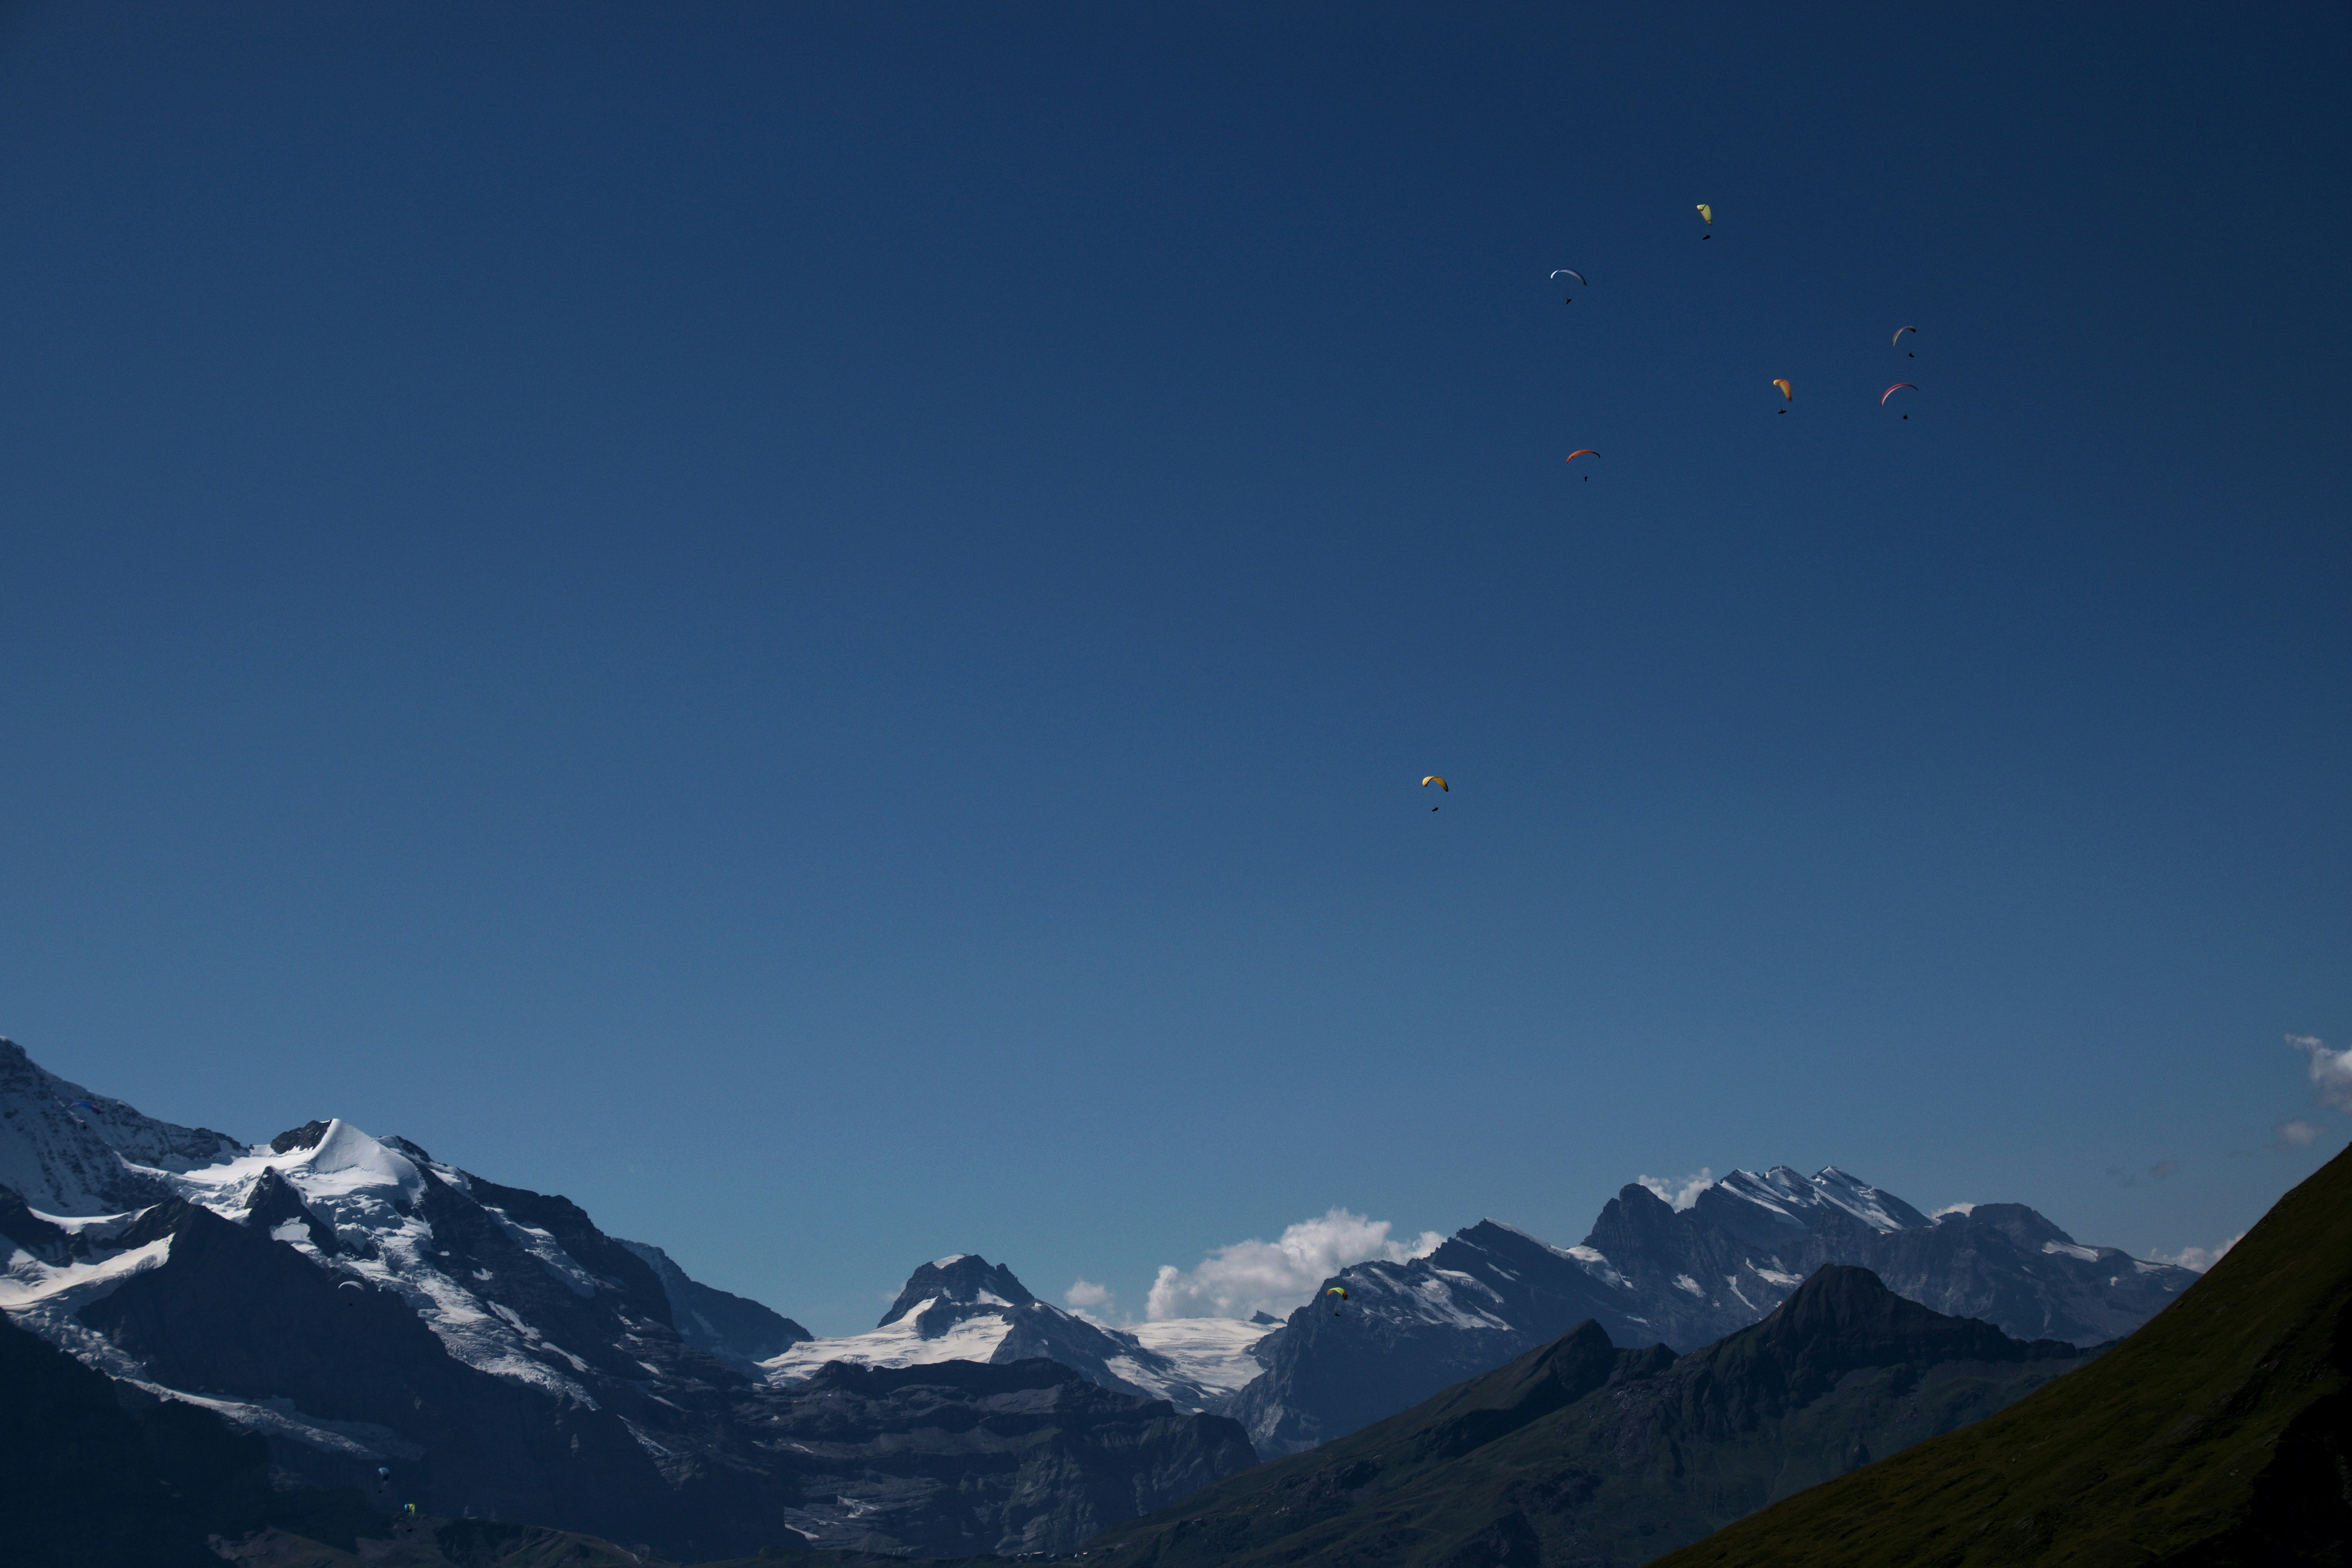 This photo of paragliders was taken overlooking Grindelwald, Switzerland